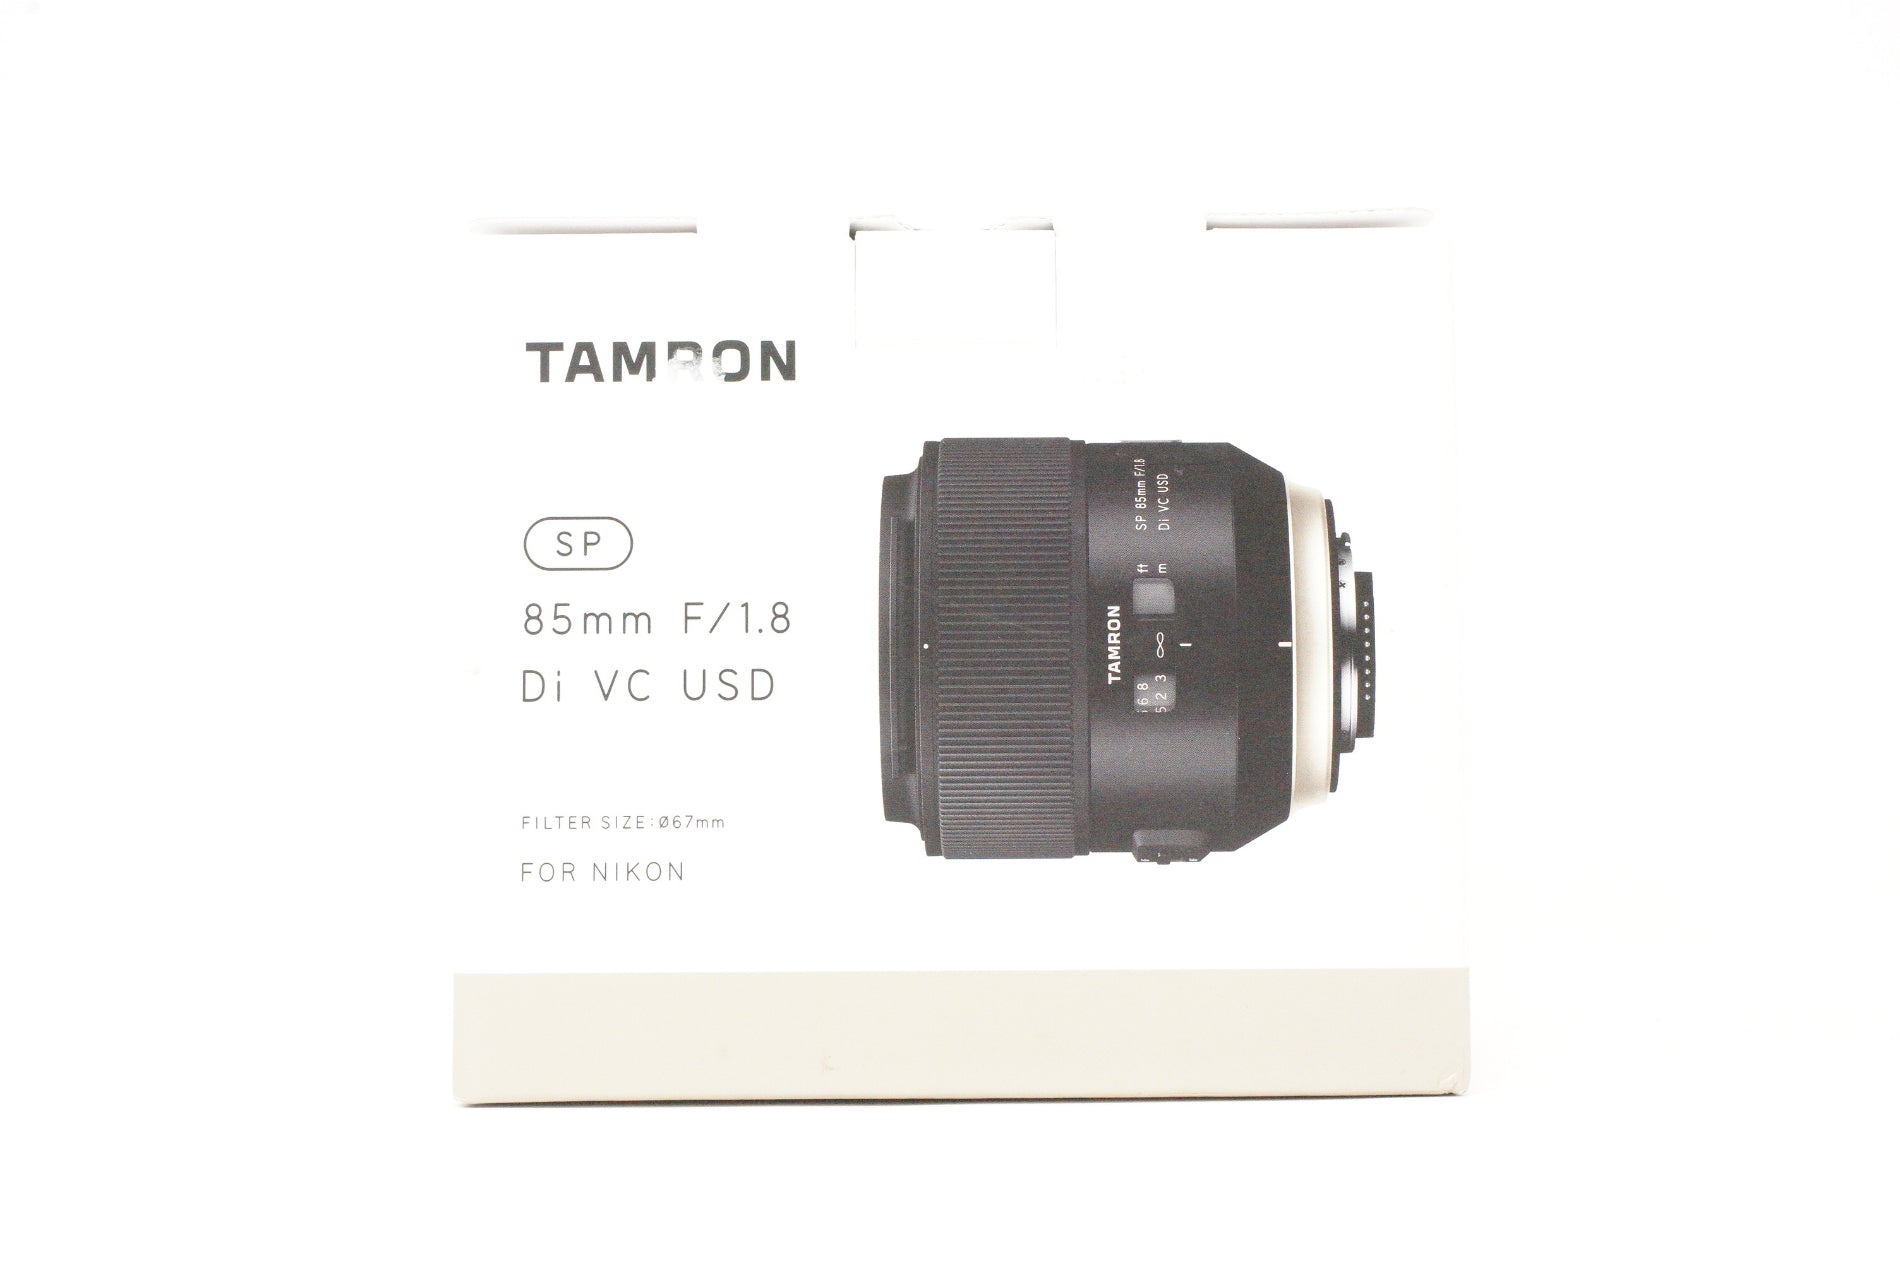 Used Tamron SP 85mm F1.8 Di VC USD lens for Nikon F